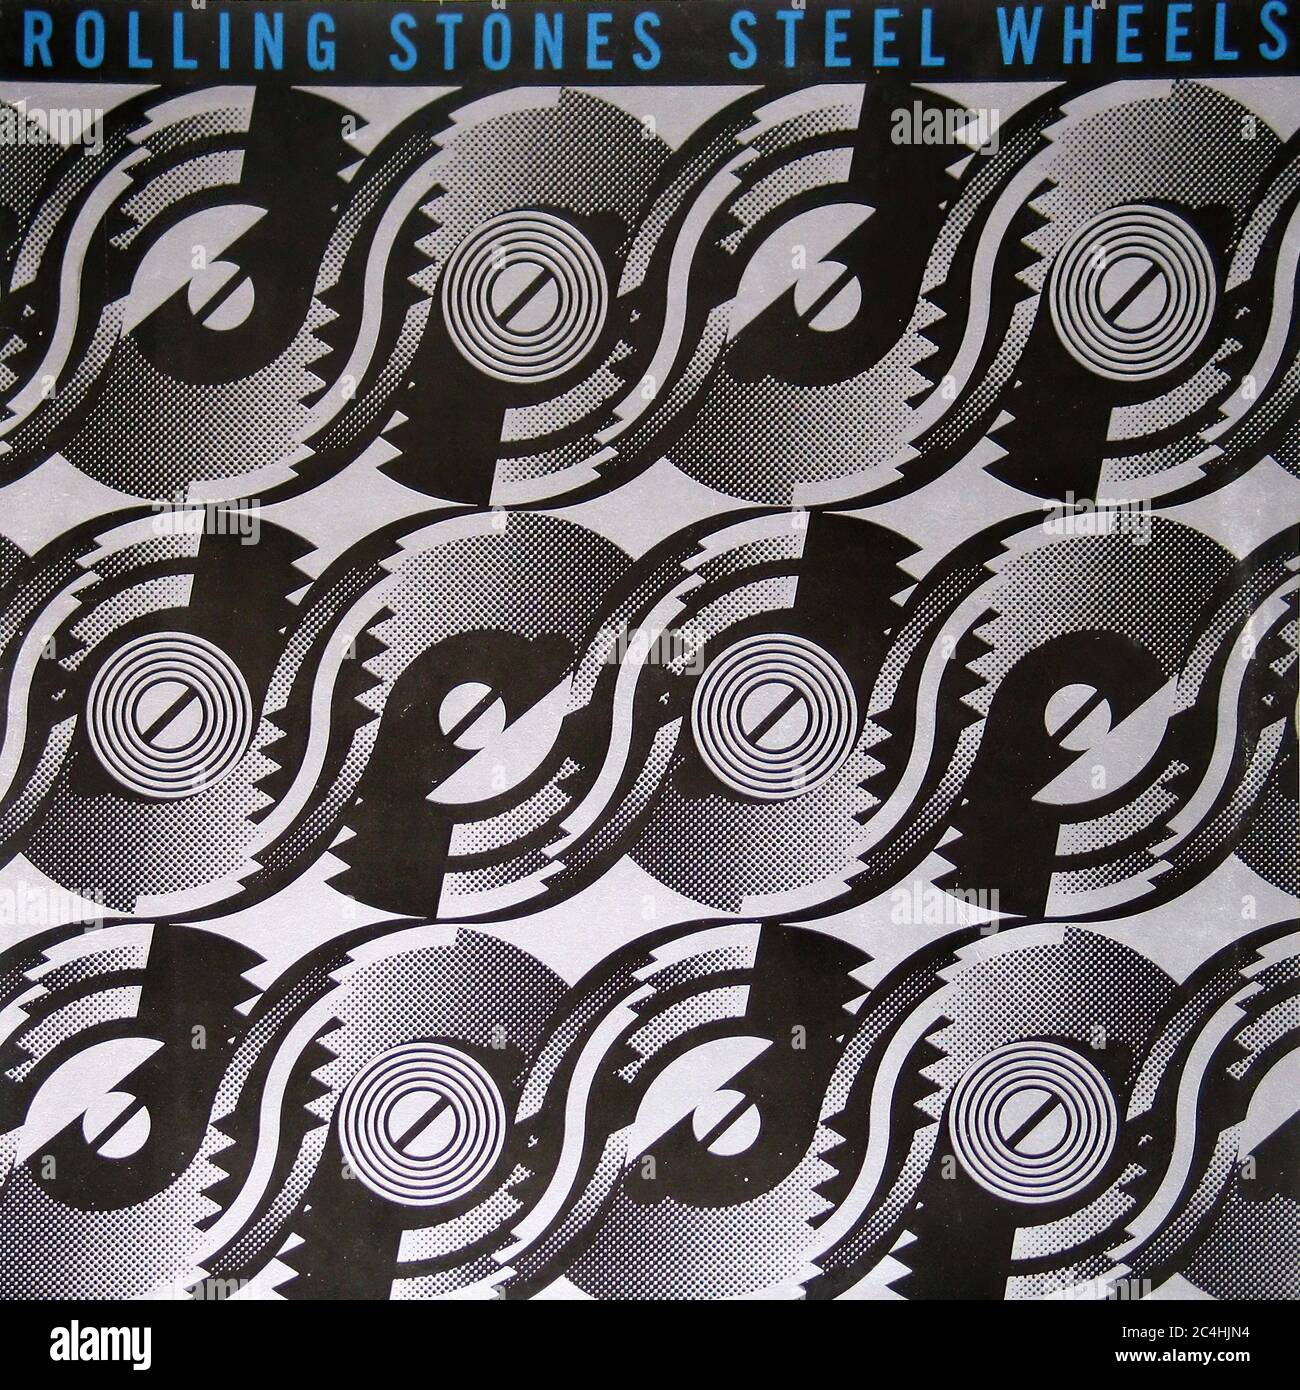 Rolling Stones Steel Wheels 12'' Vinyl Lp - Vintage Record Cover Stock  Photo - Alamy